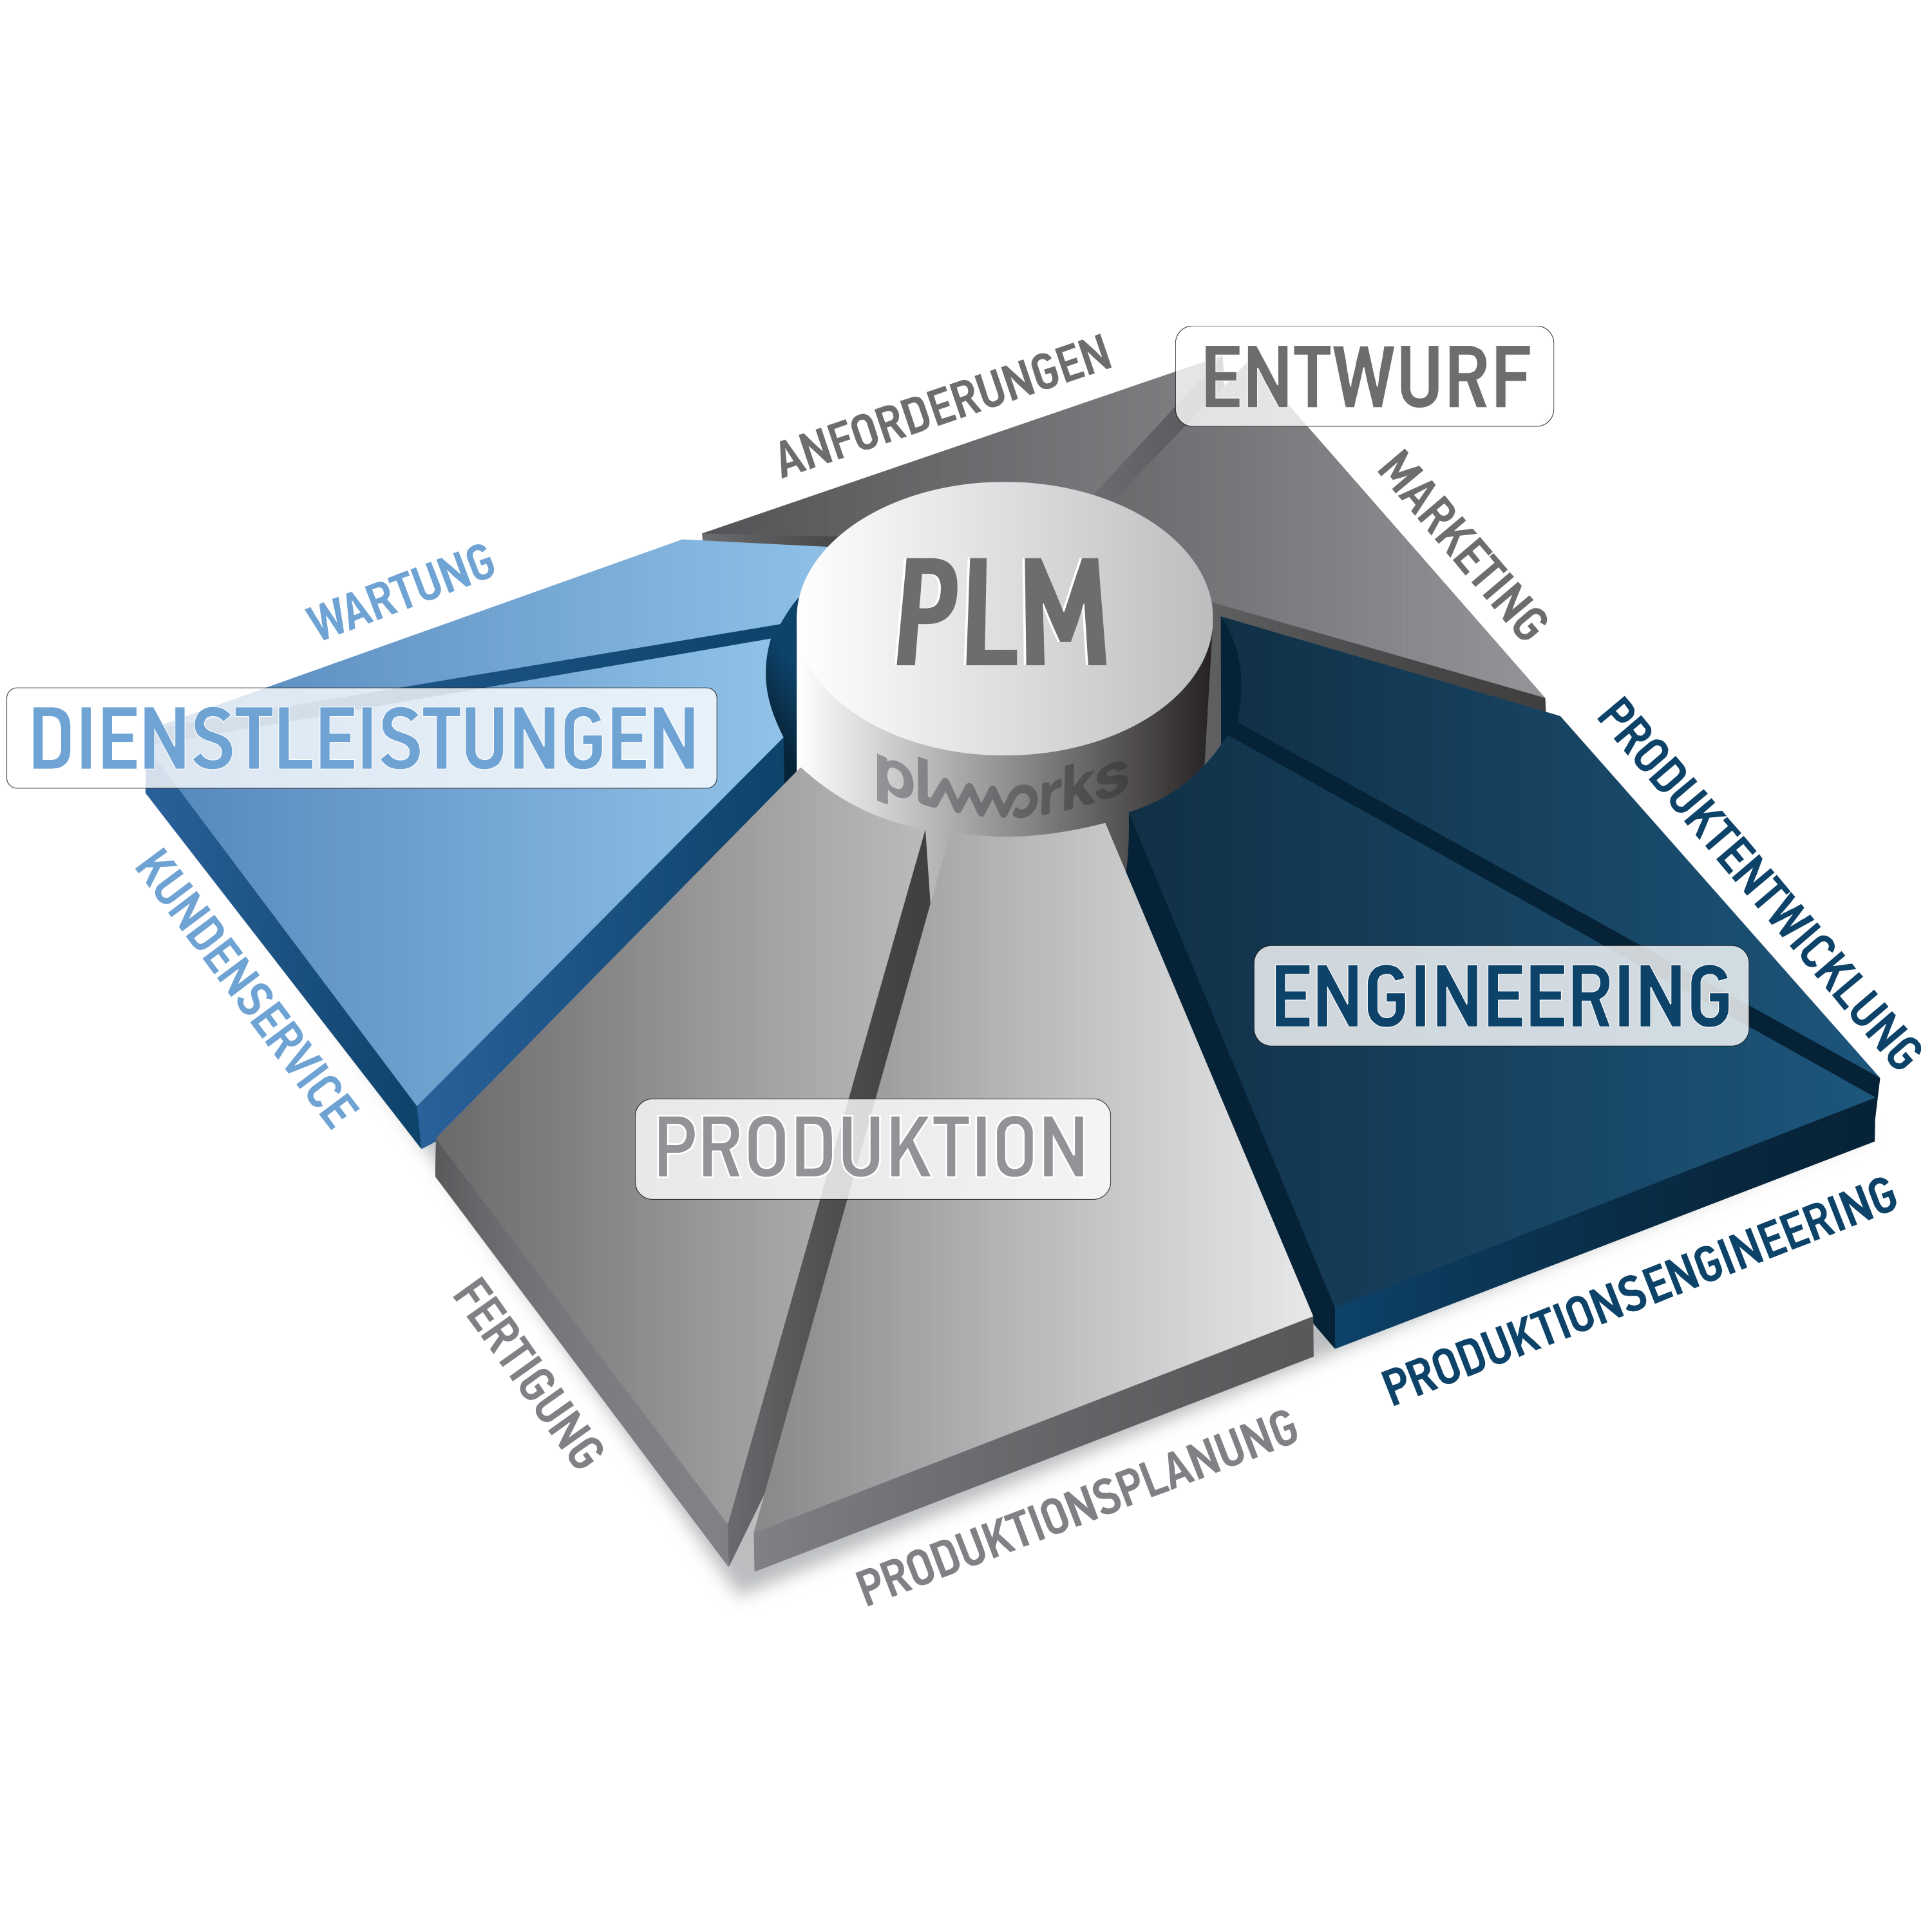 PLM Beratung - PLMWorks GmbH